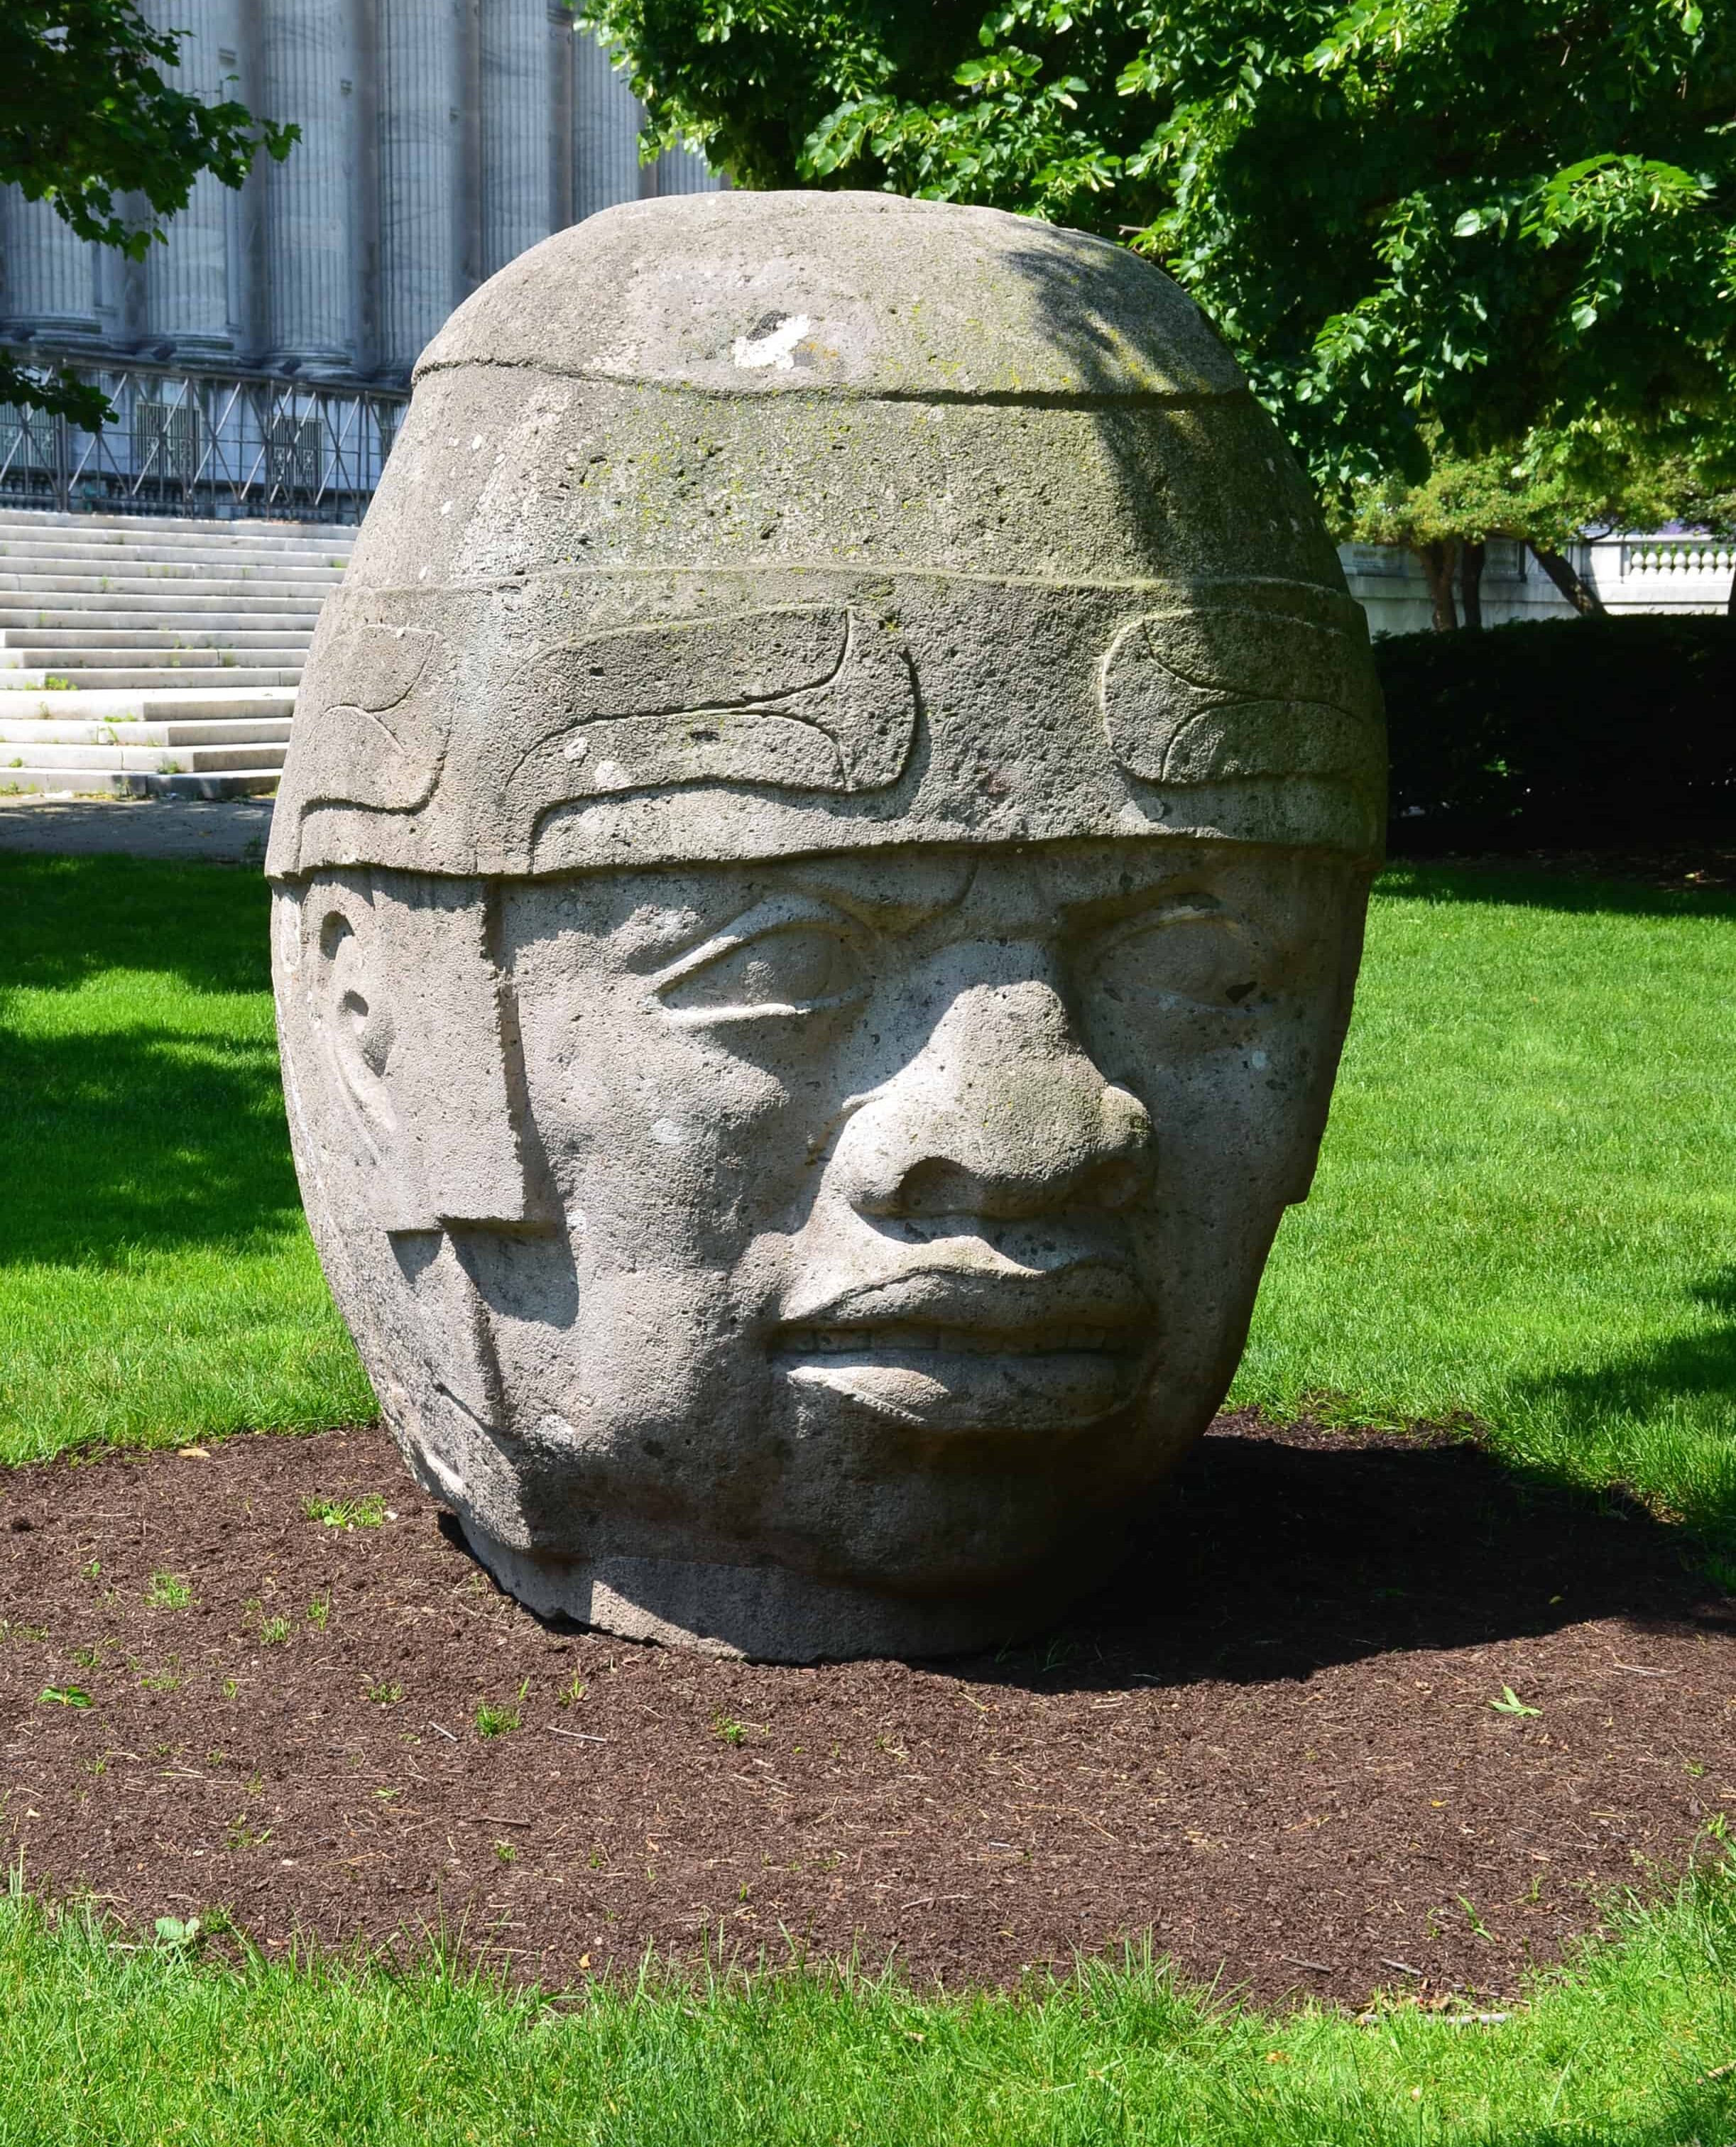 Olmec head at the Field Museum